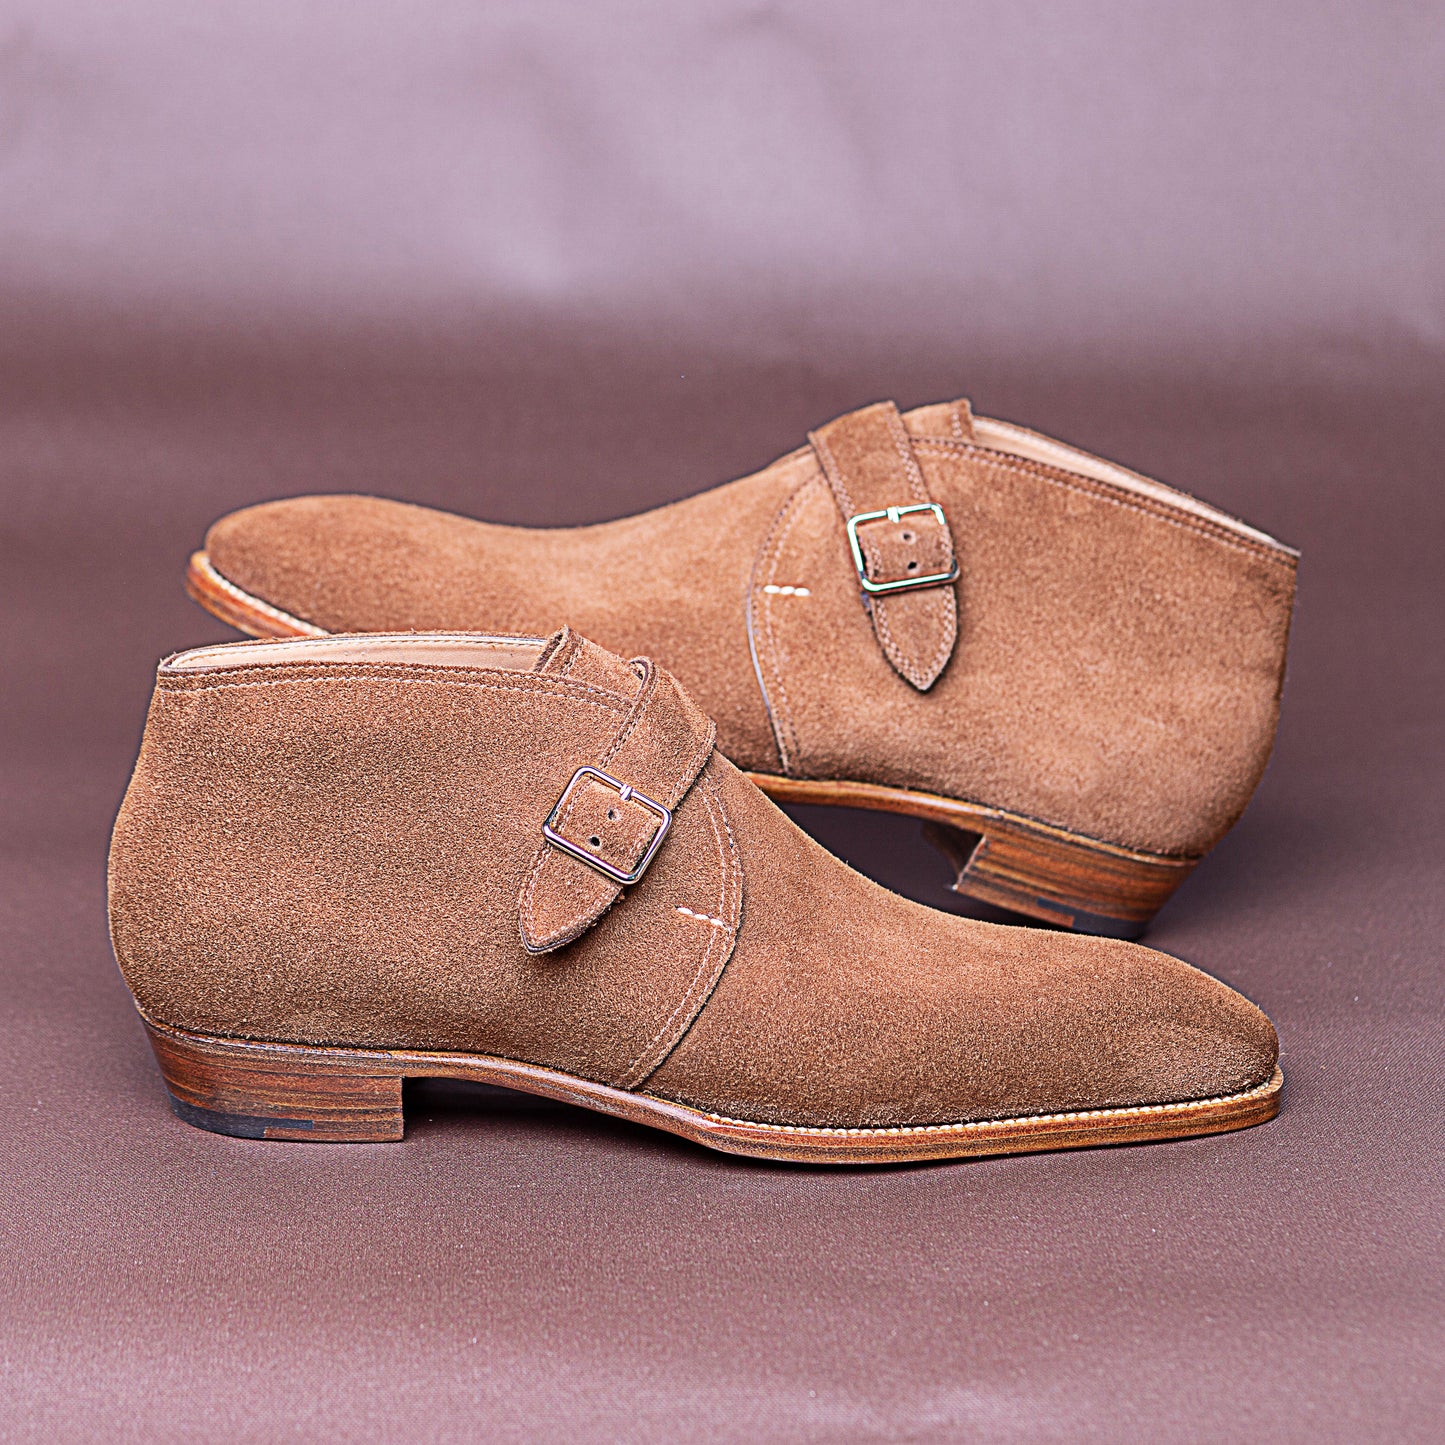 Gilman - Chukka boots with arrowy belt and cuban heel plus 4 mm